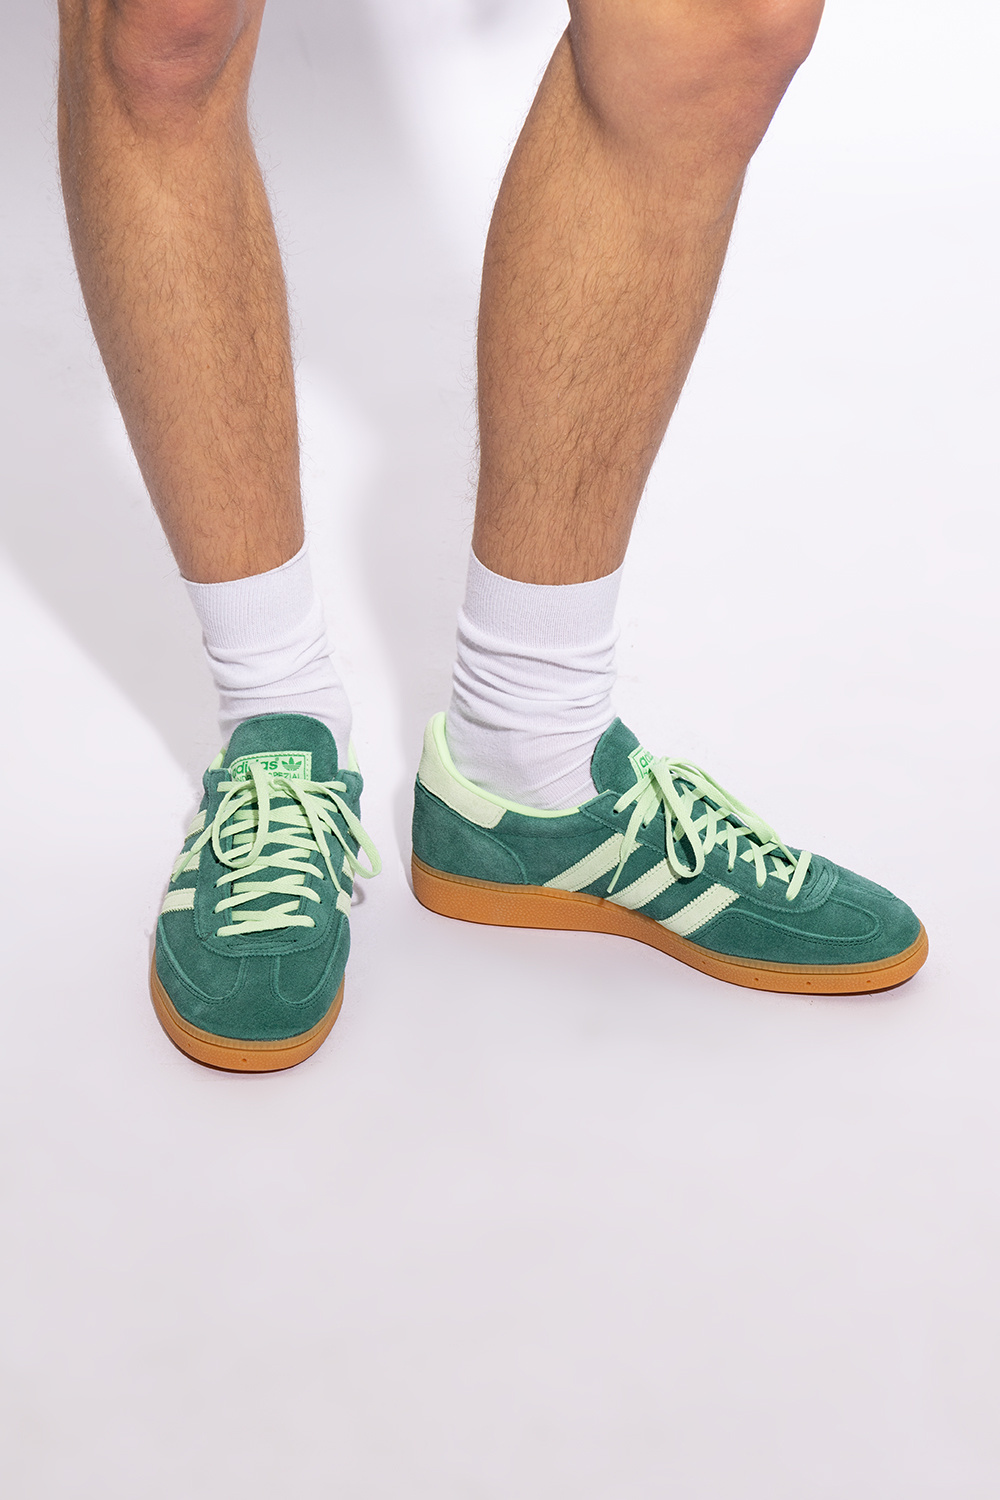 ADIDAS Originals ‘Handball Spezial’ sneakers